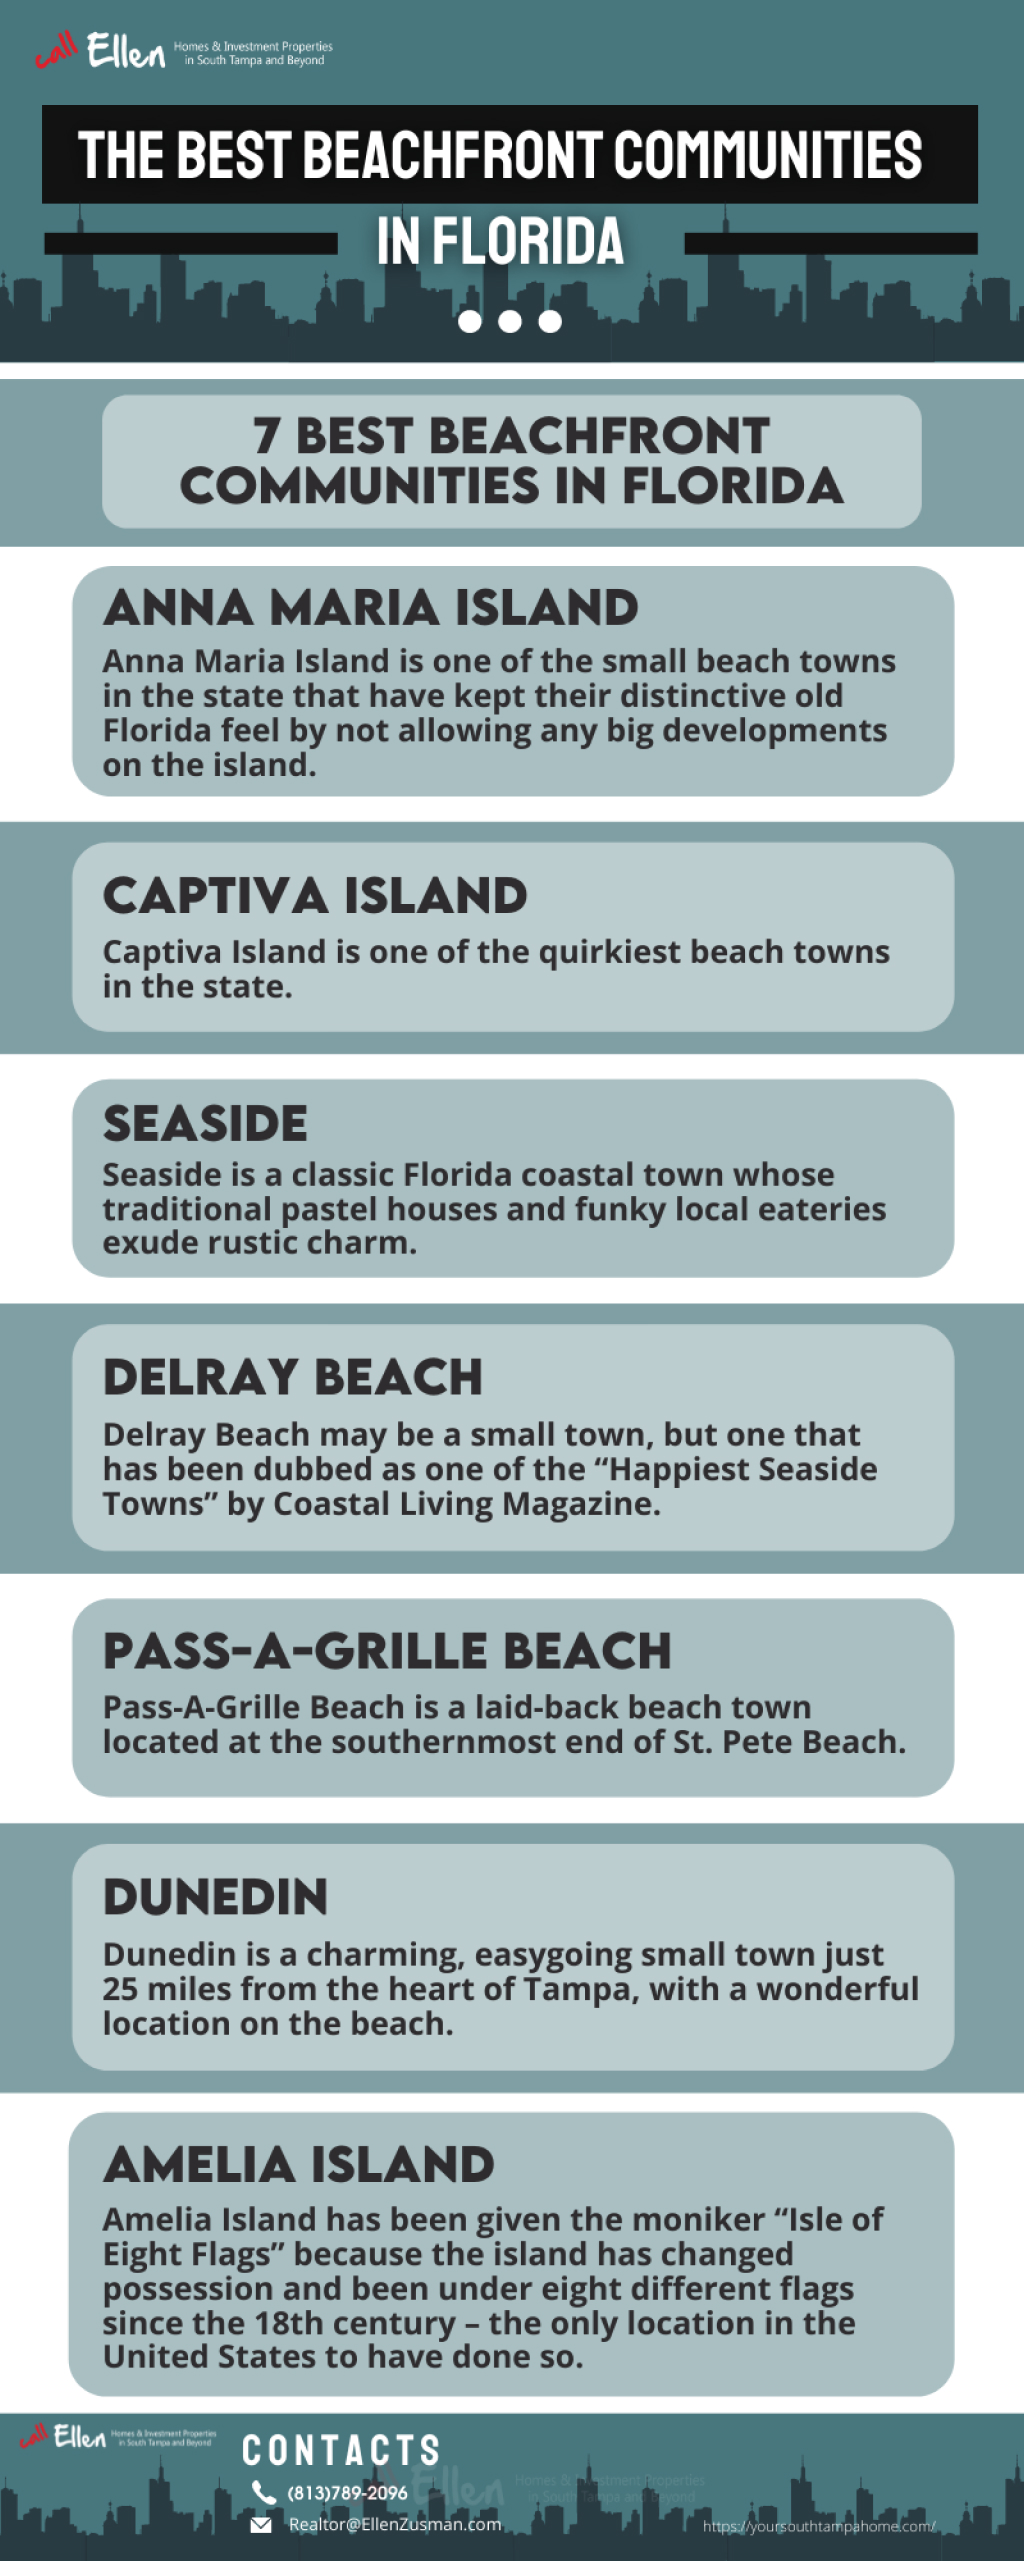 The Best Beachfront Communities in Florida